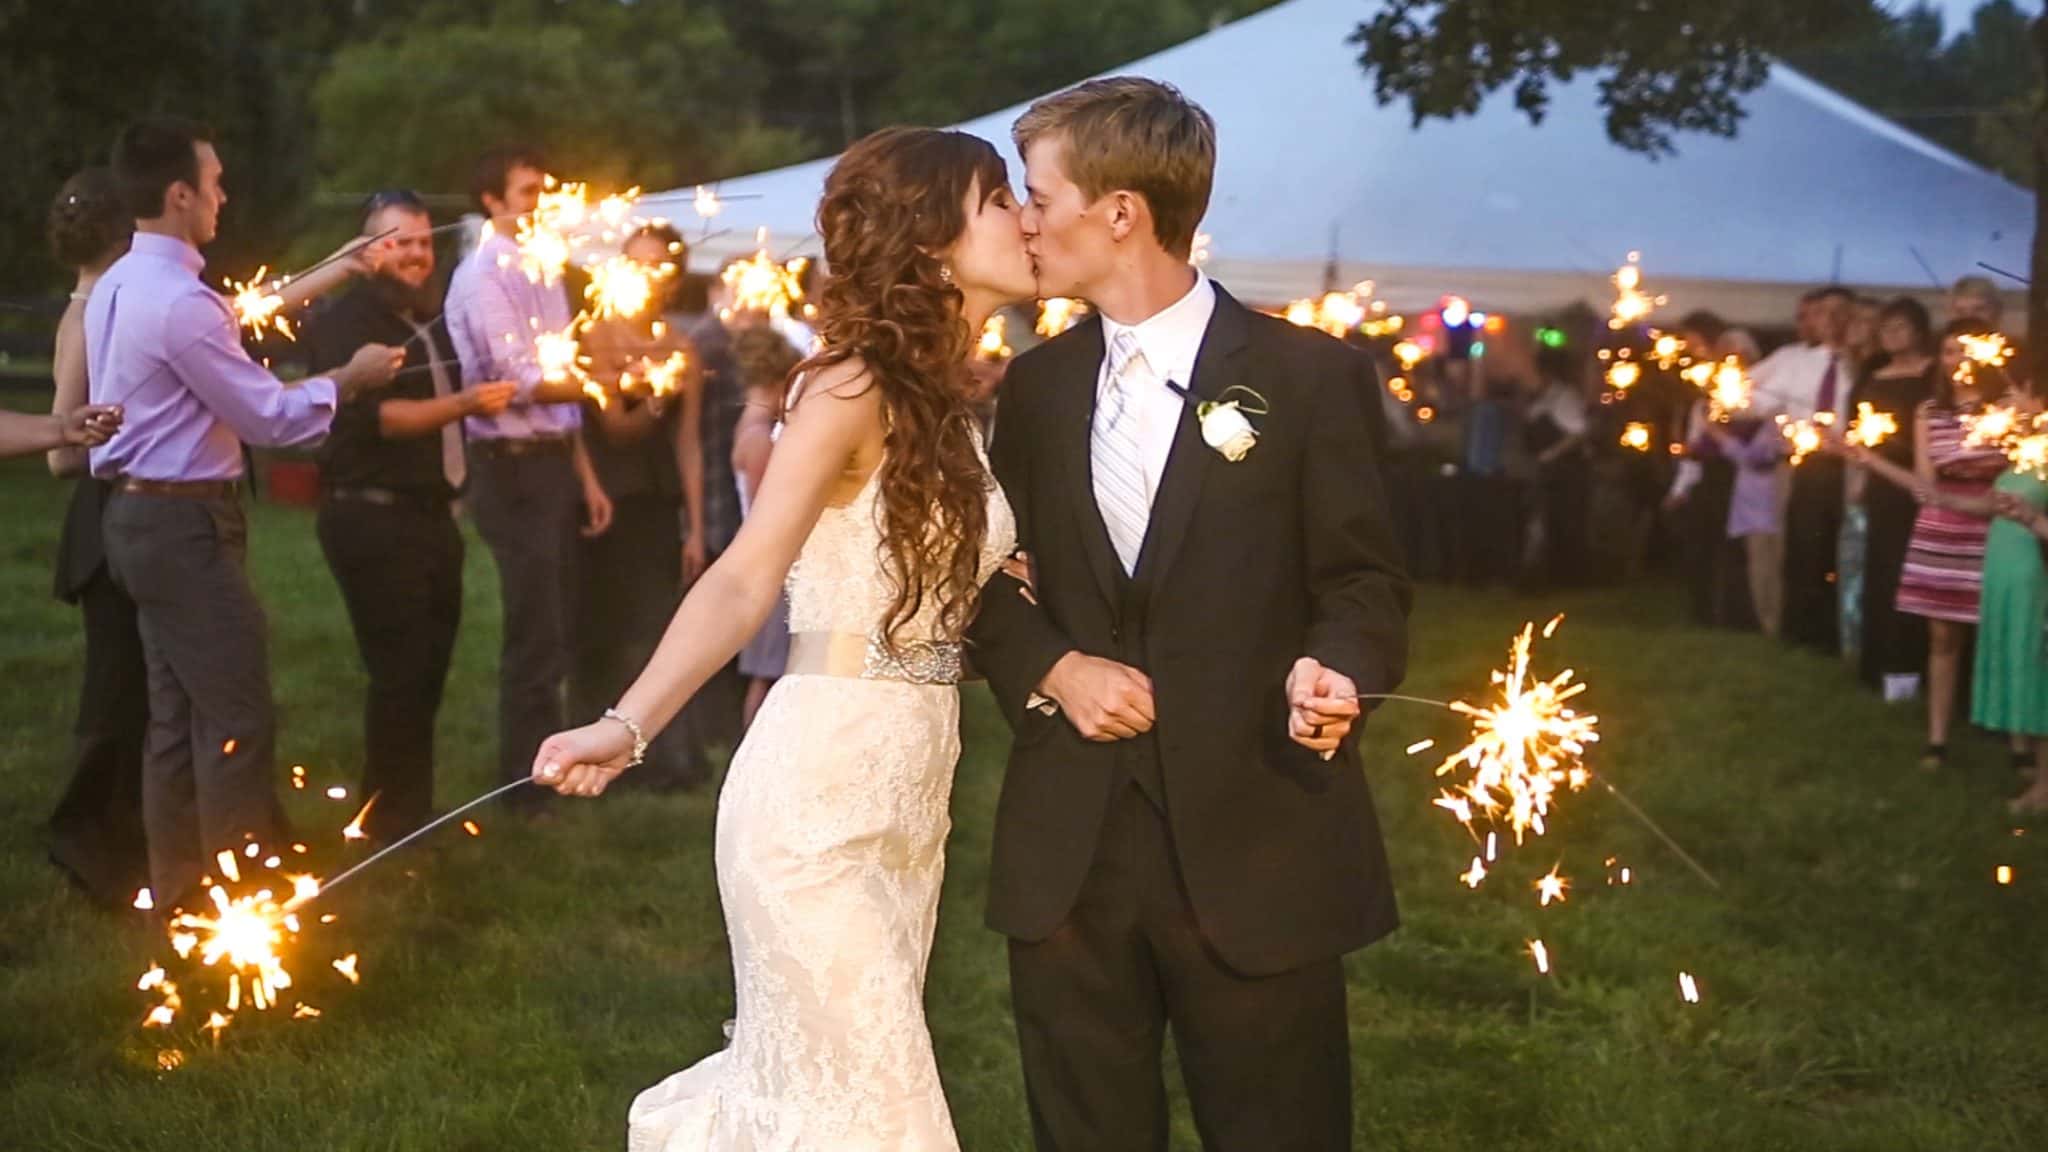 Dillon + Laura: Wedding Video Highlights from London, Kentucky